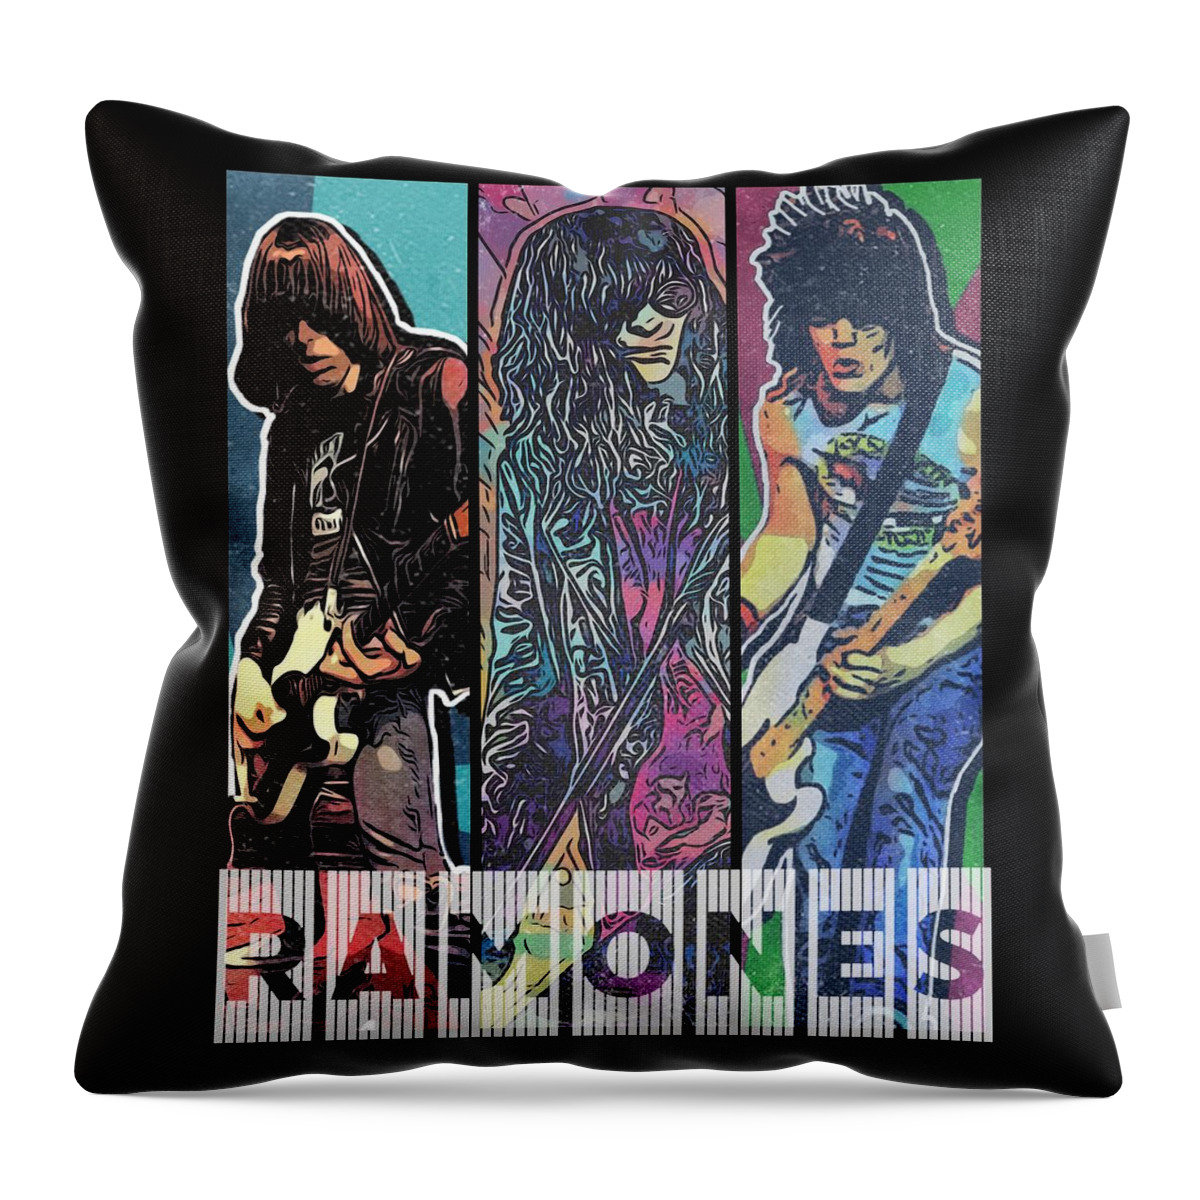 Ramones Throw Pillow featuring the digital art Ramones Pop Art Collage II by Christina Rick